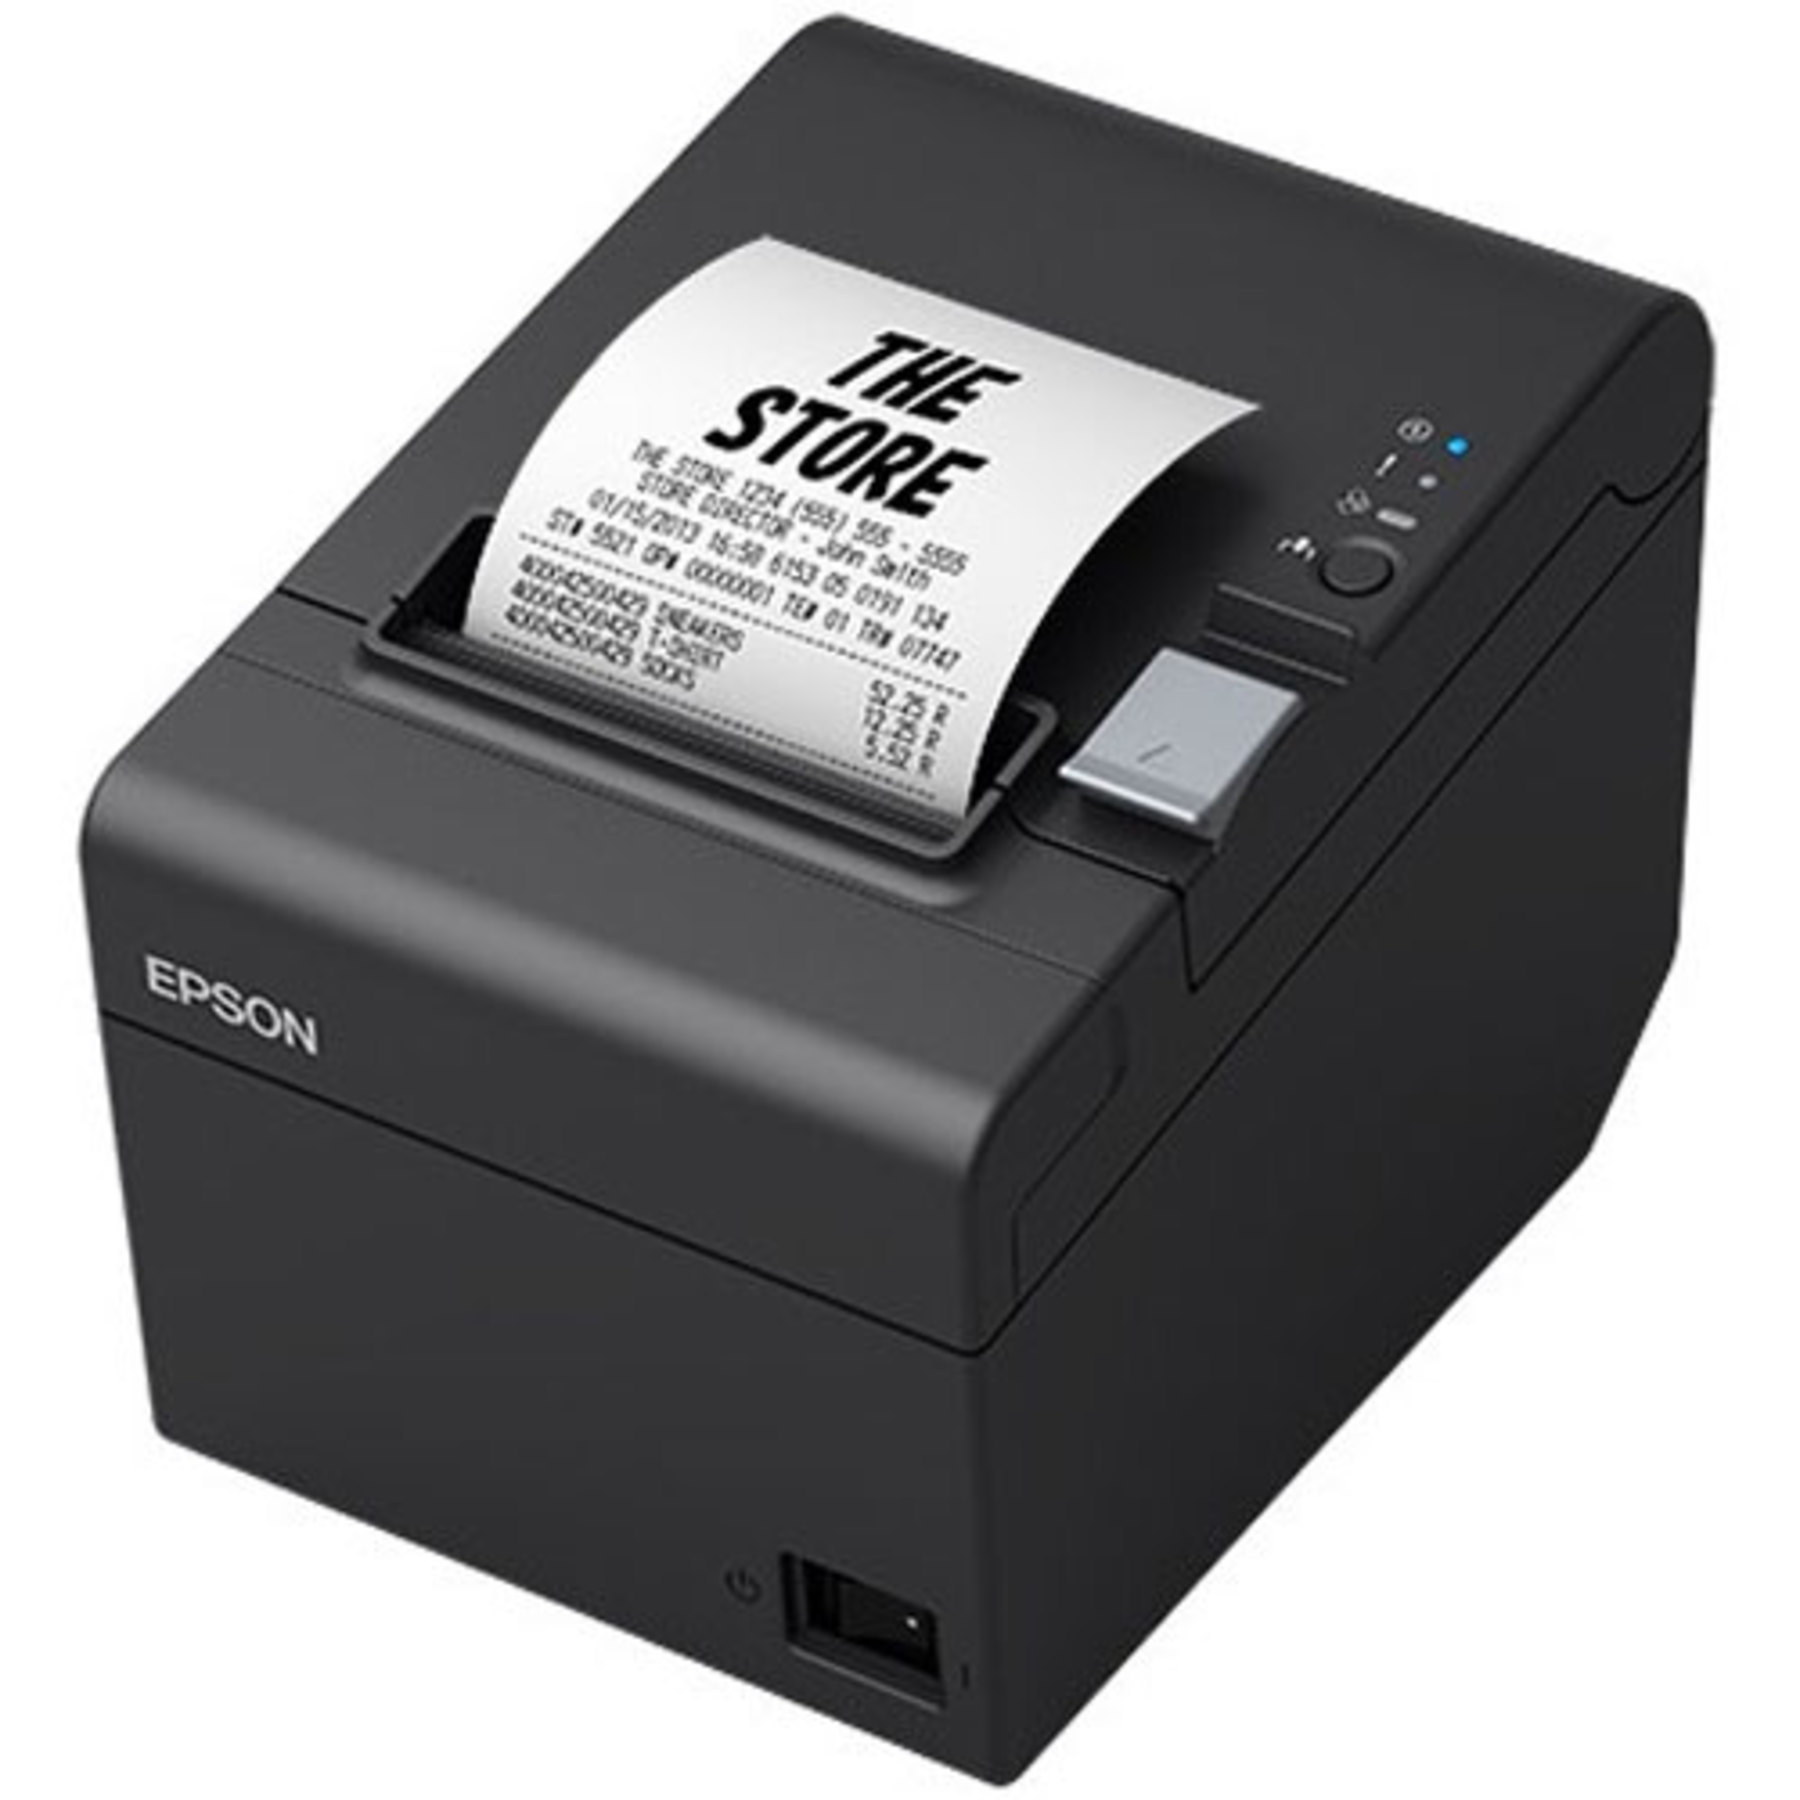 Epson TMT20III Receipt Printer Cash Drawers Ireland